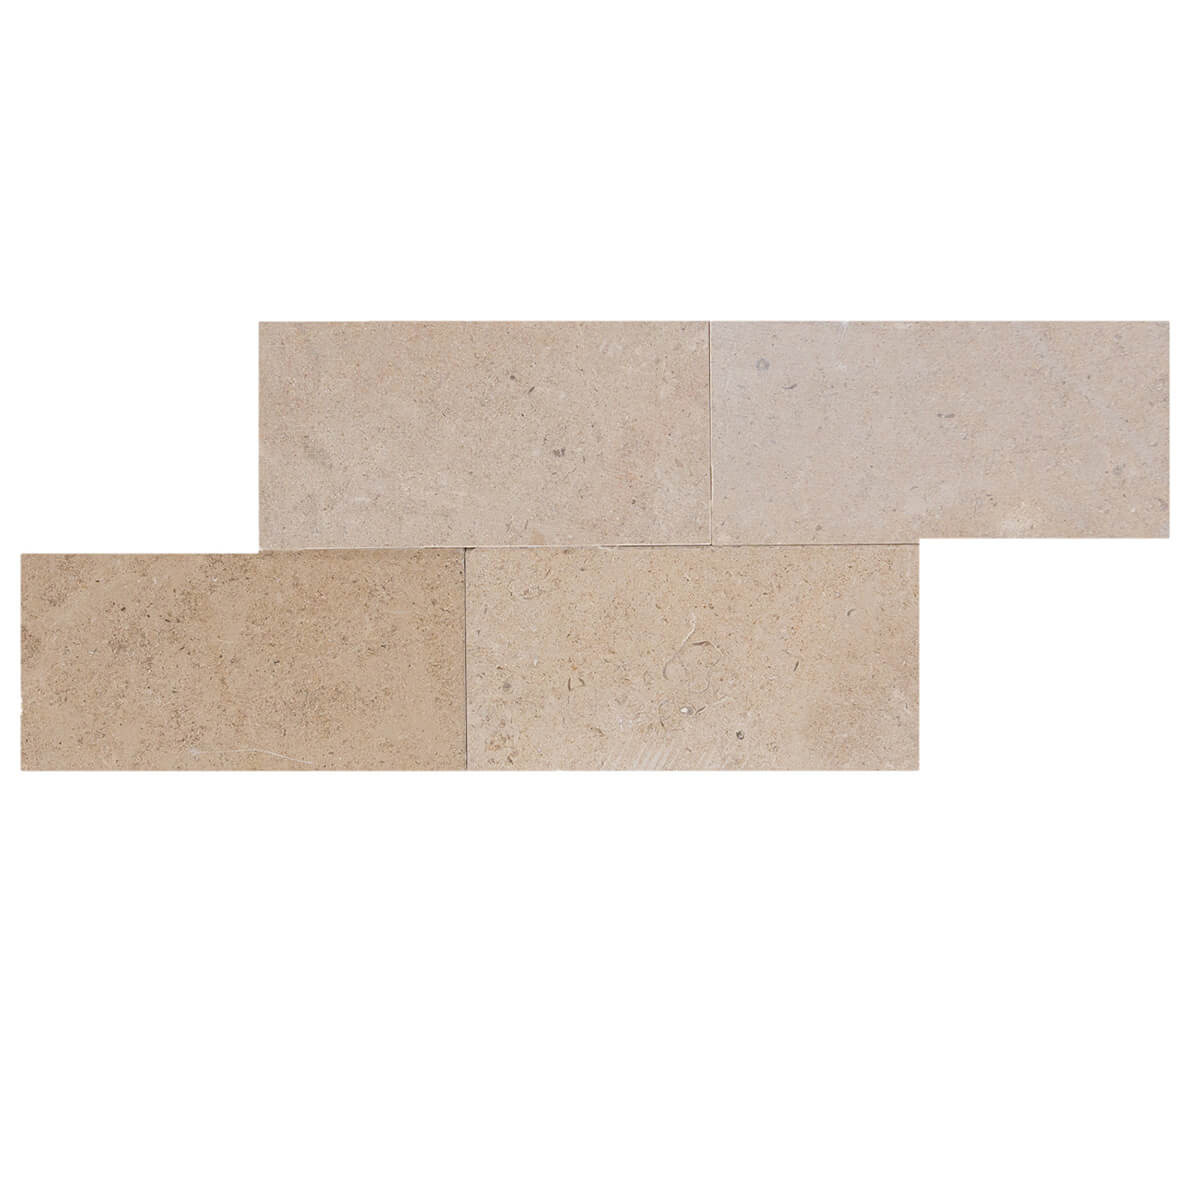 haussmann corton beige limestone rectangle natural stone field tile 3x6 honed